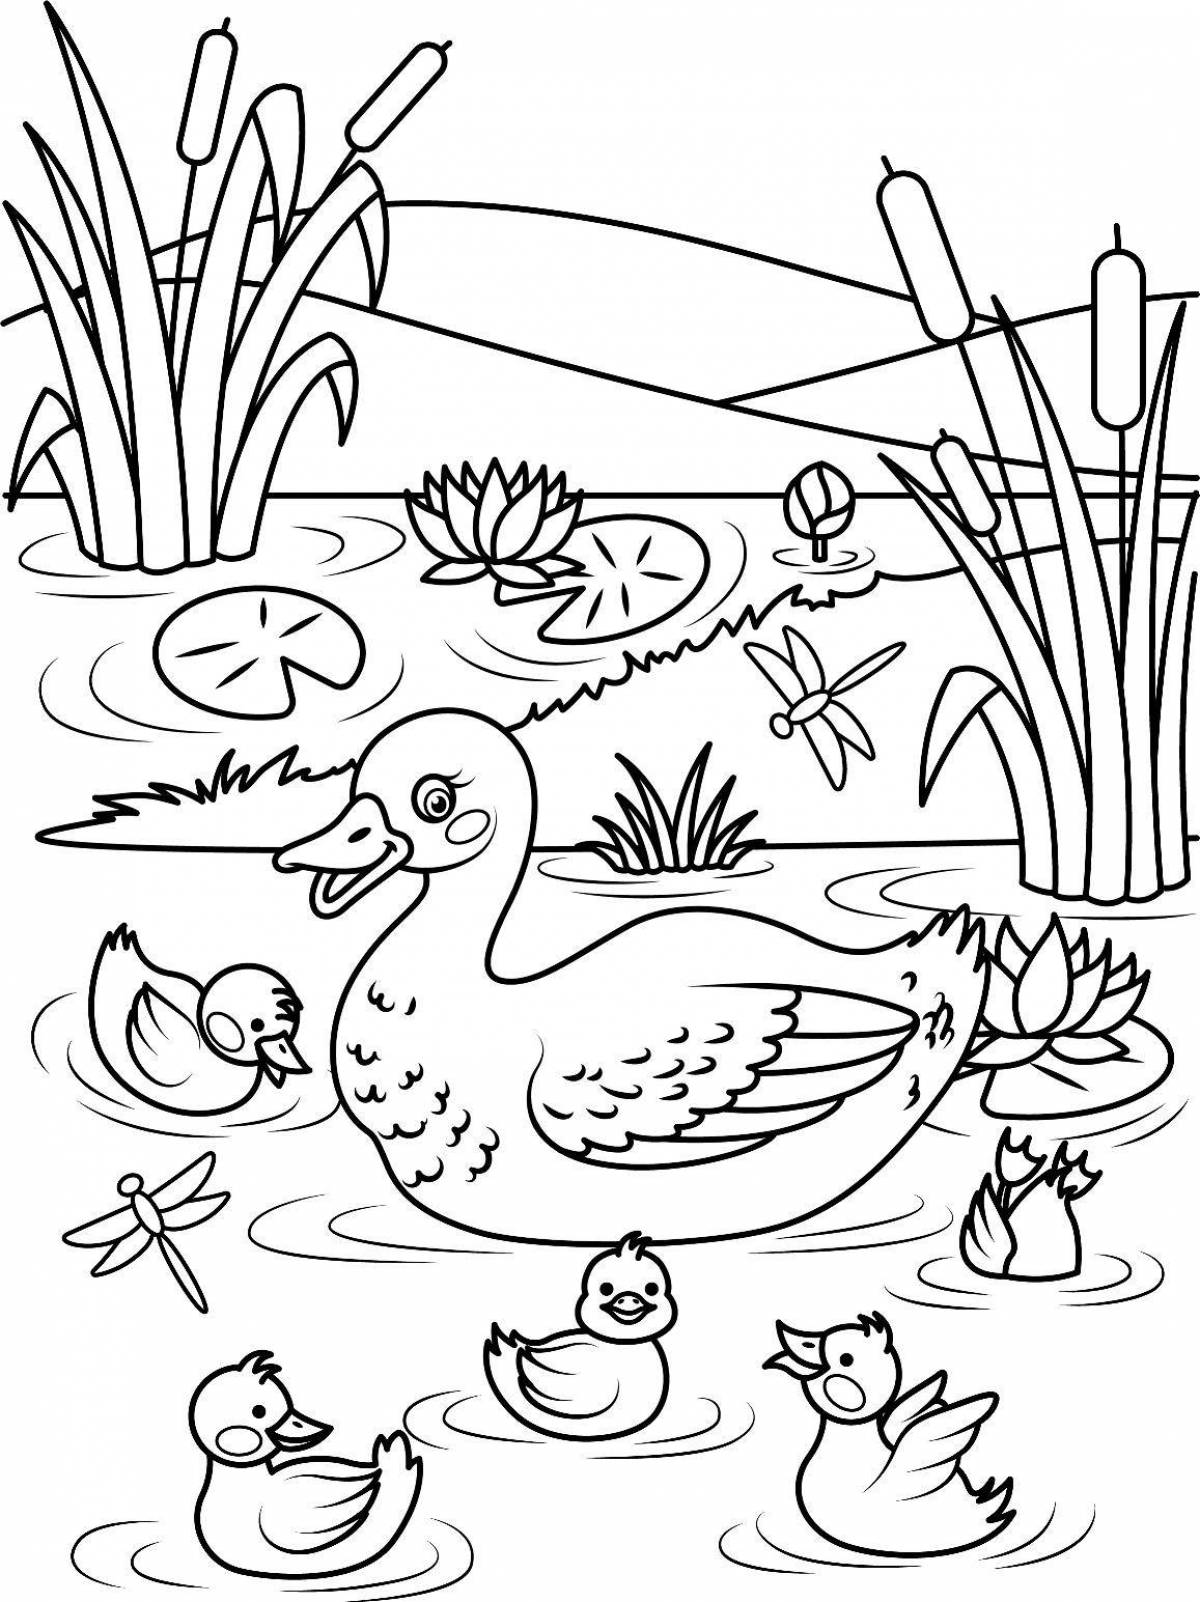 Color-crazy duck coloring page для детей 3-4 лет